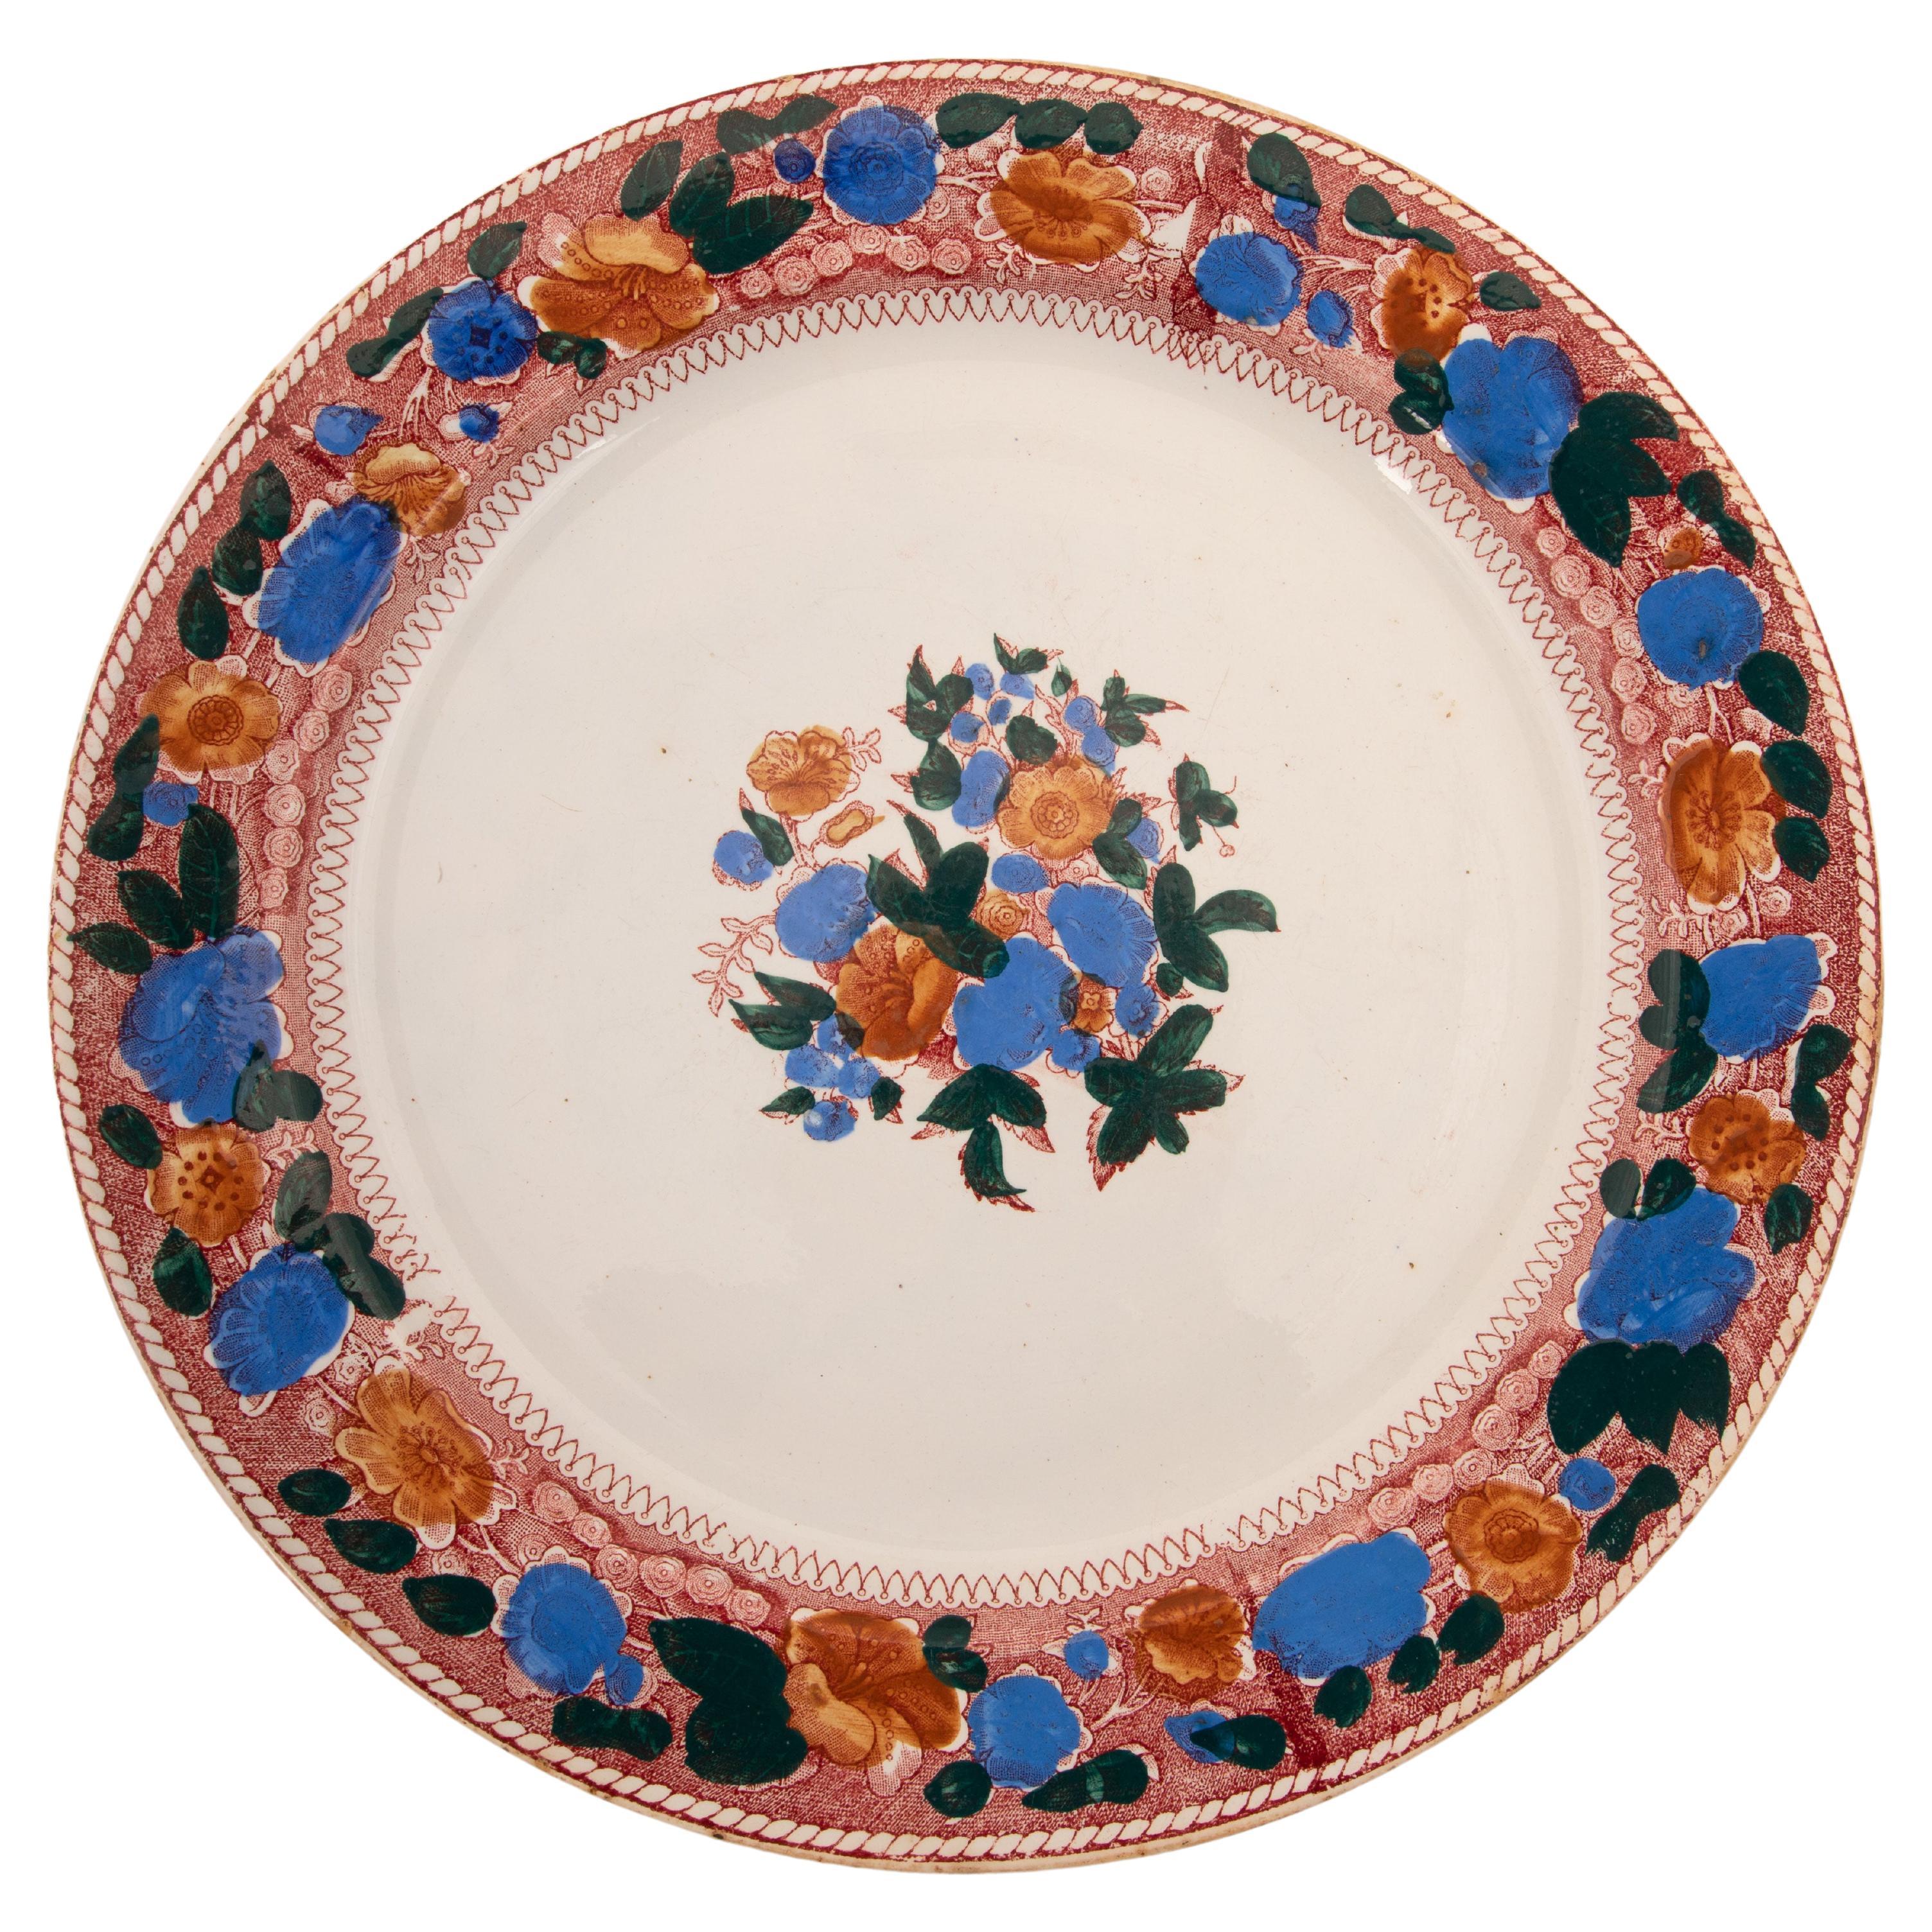 Kuznetsov-Keramikteller, Russland, frühes 20. Jahrhundert